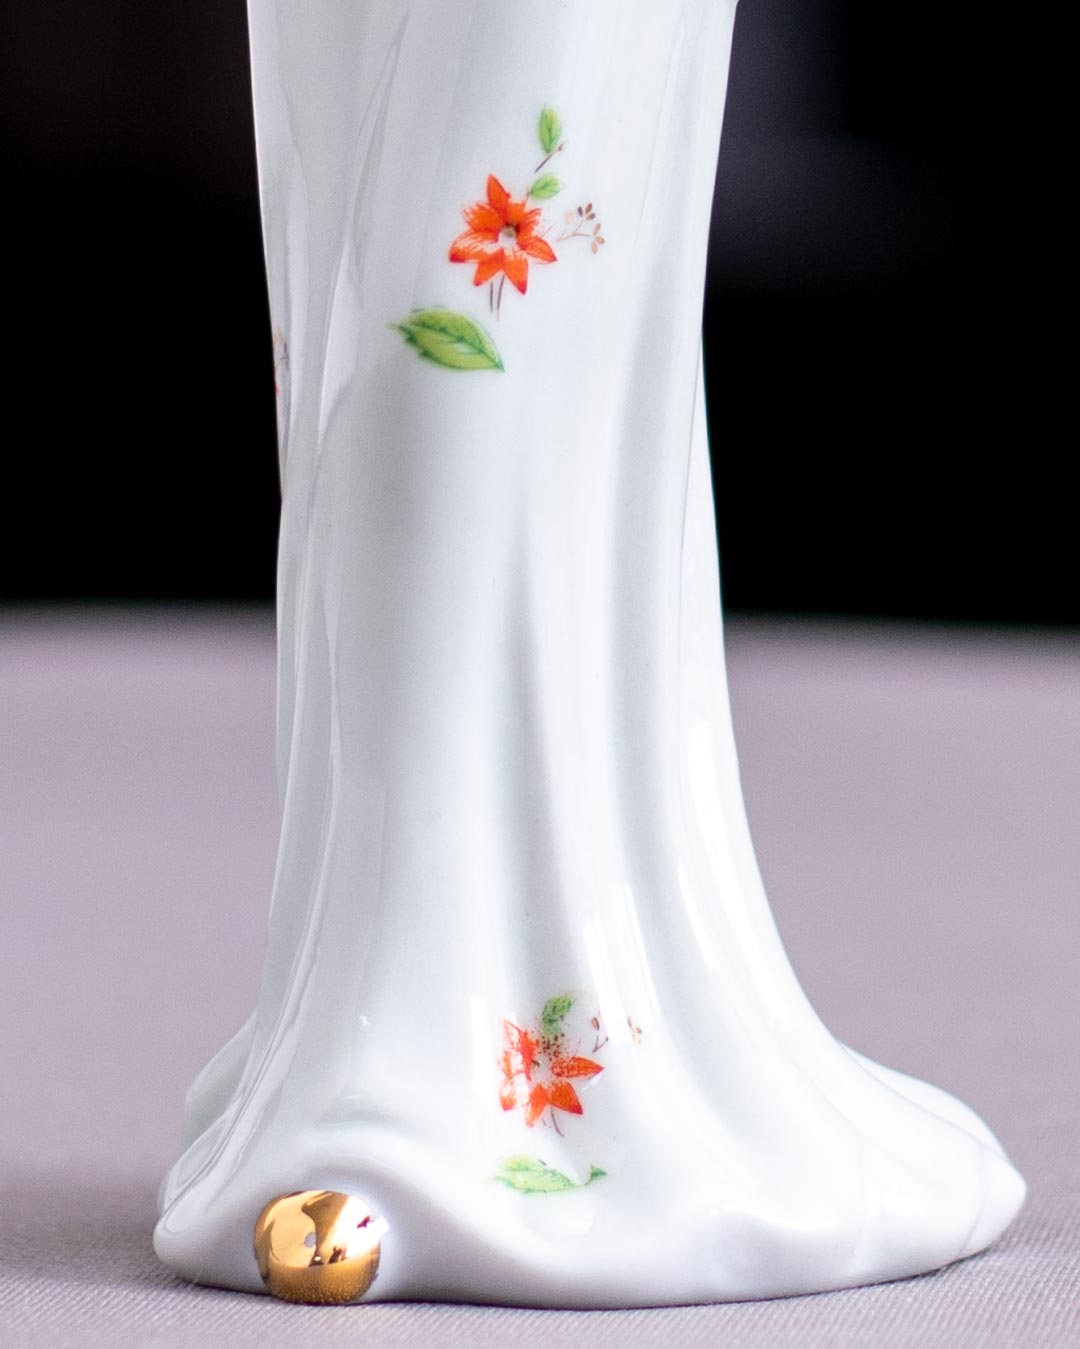 Victorian Lady - Fine Porcelain Figurine